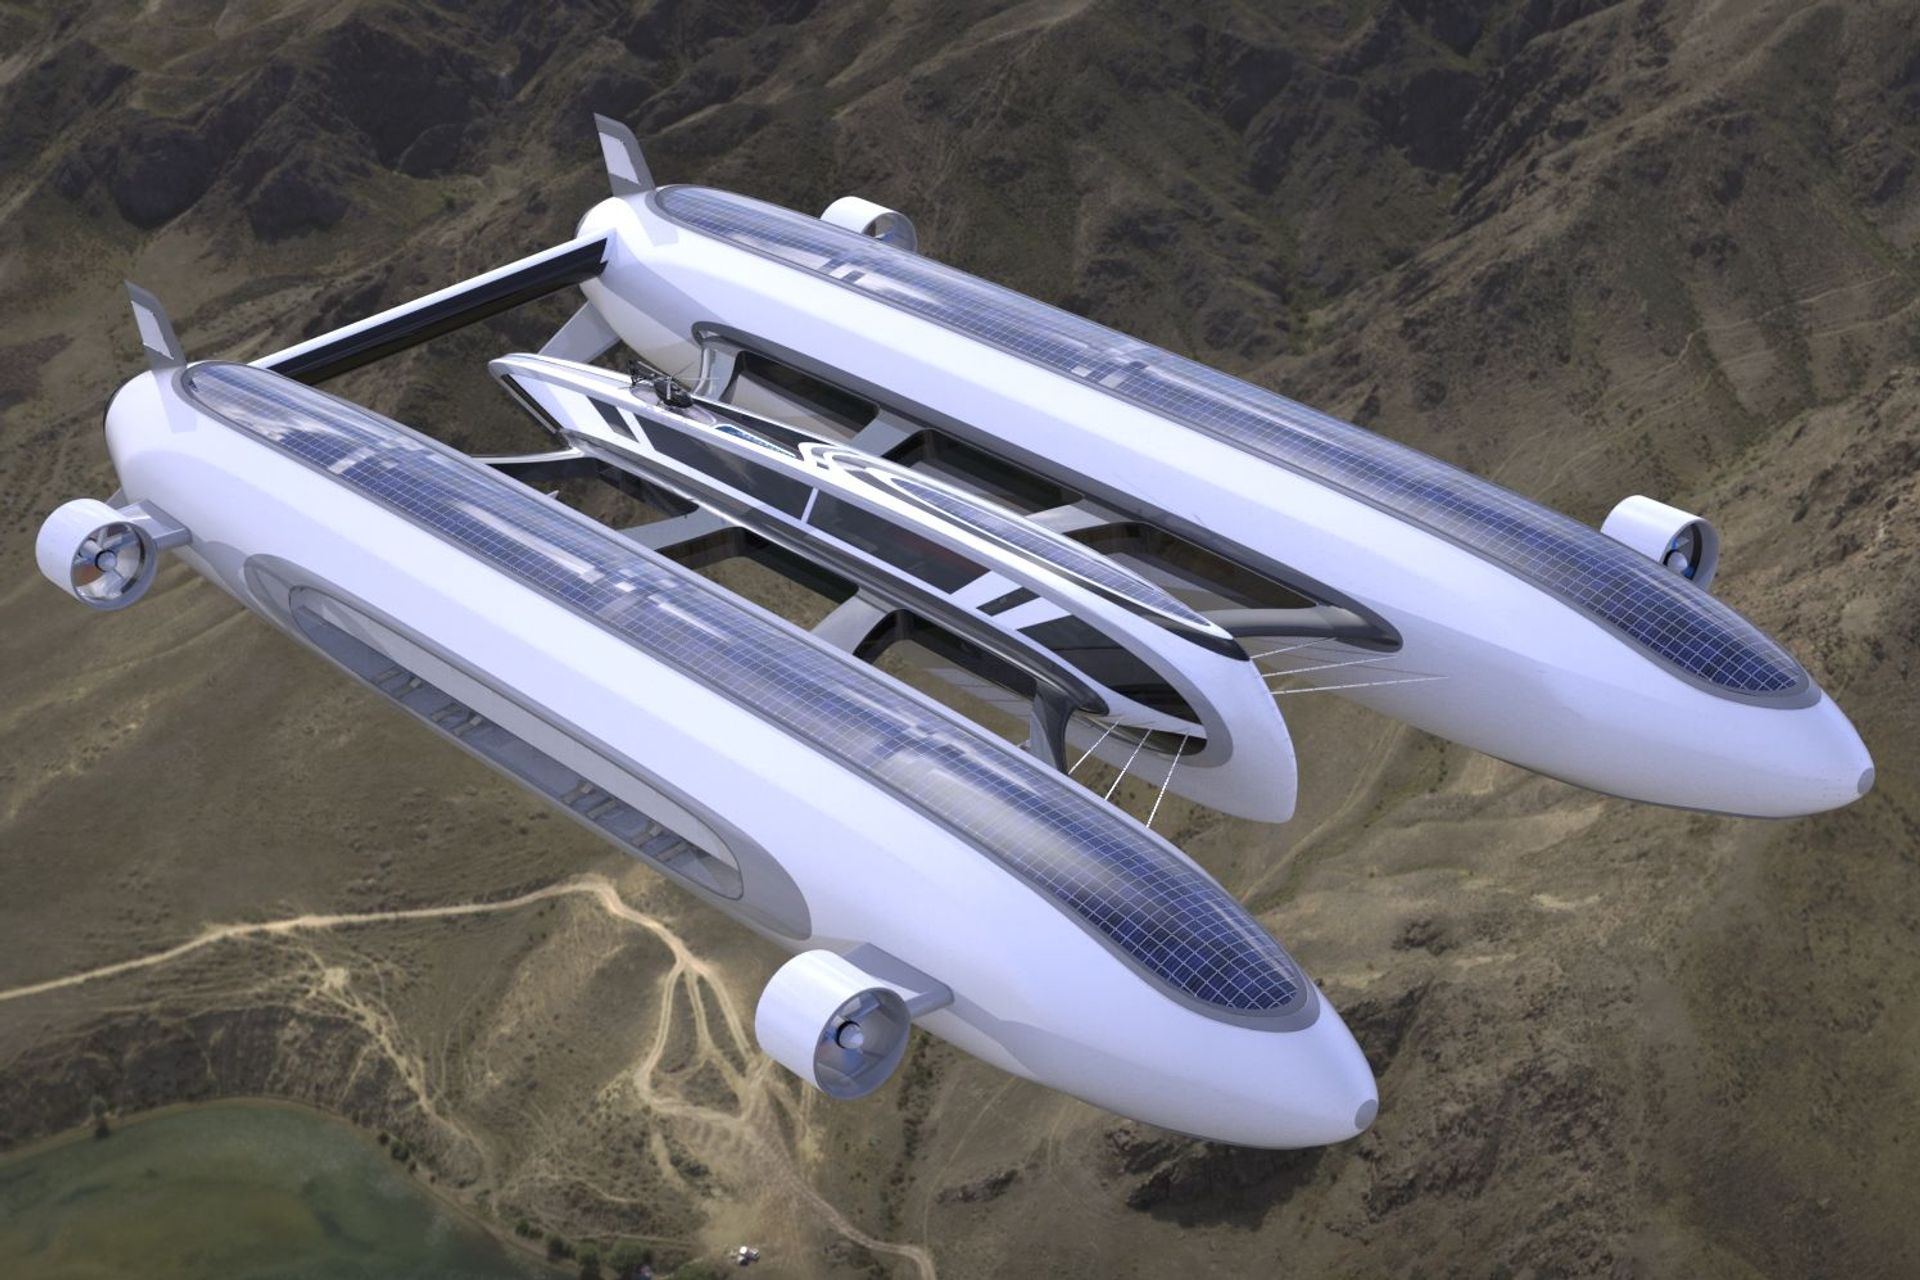 «Sky Yacht» հայեցակարգը, որը մշակվել է Lazzarini Design ստուդիայի կողմից կայուն օդային և ջրային շարժունակության համար